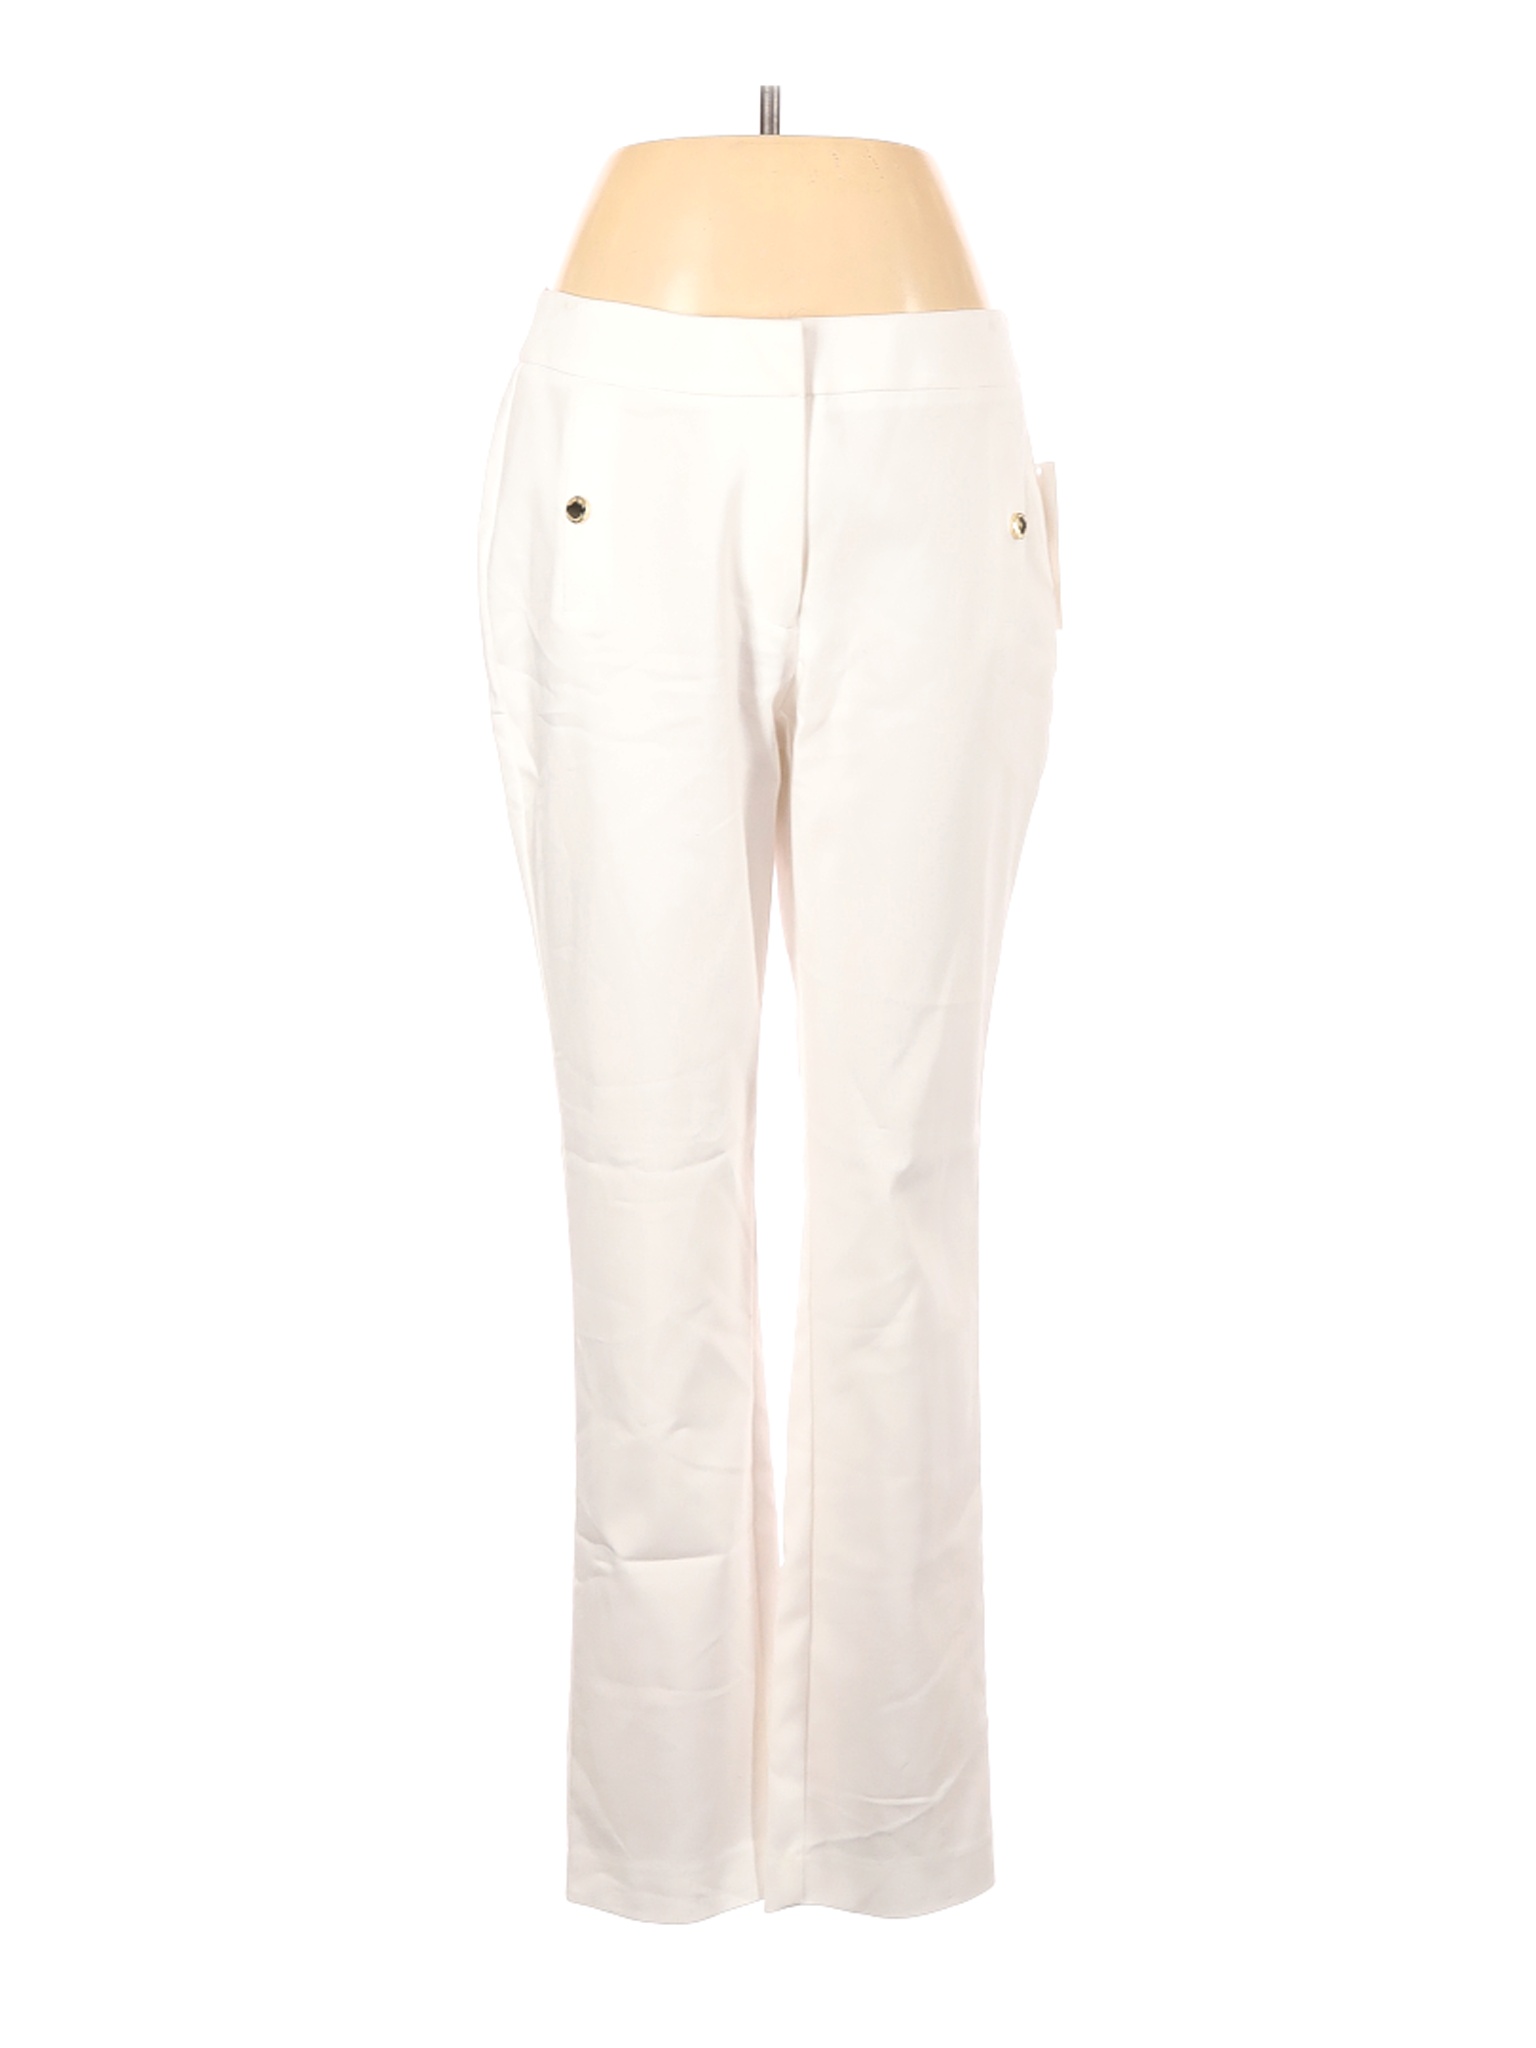 NWT Calvin Klein & Co. Women White Casual Pants 4 | eBay